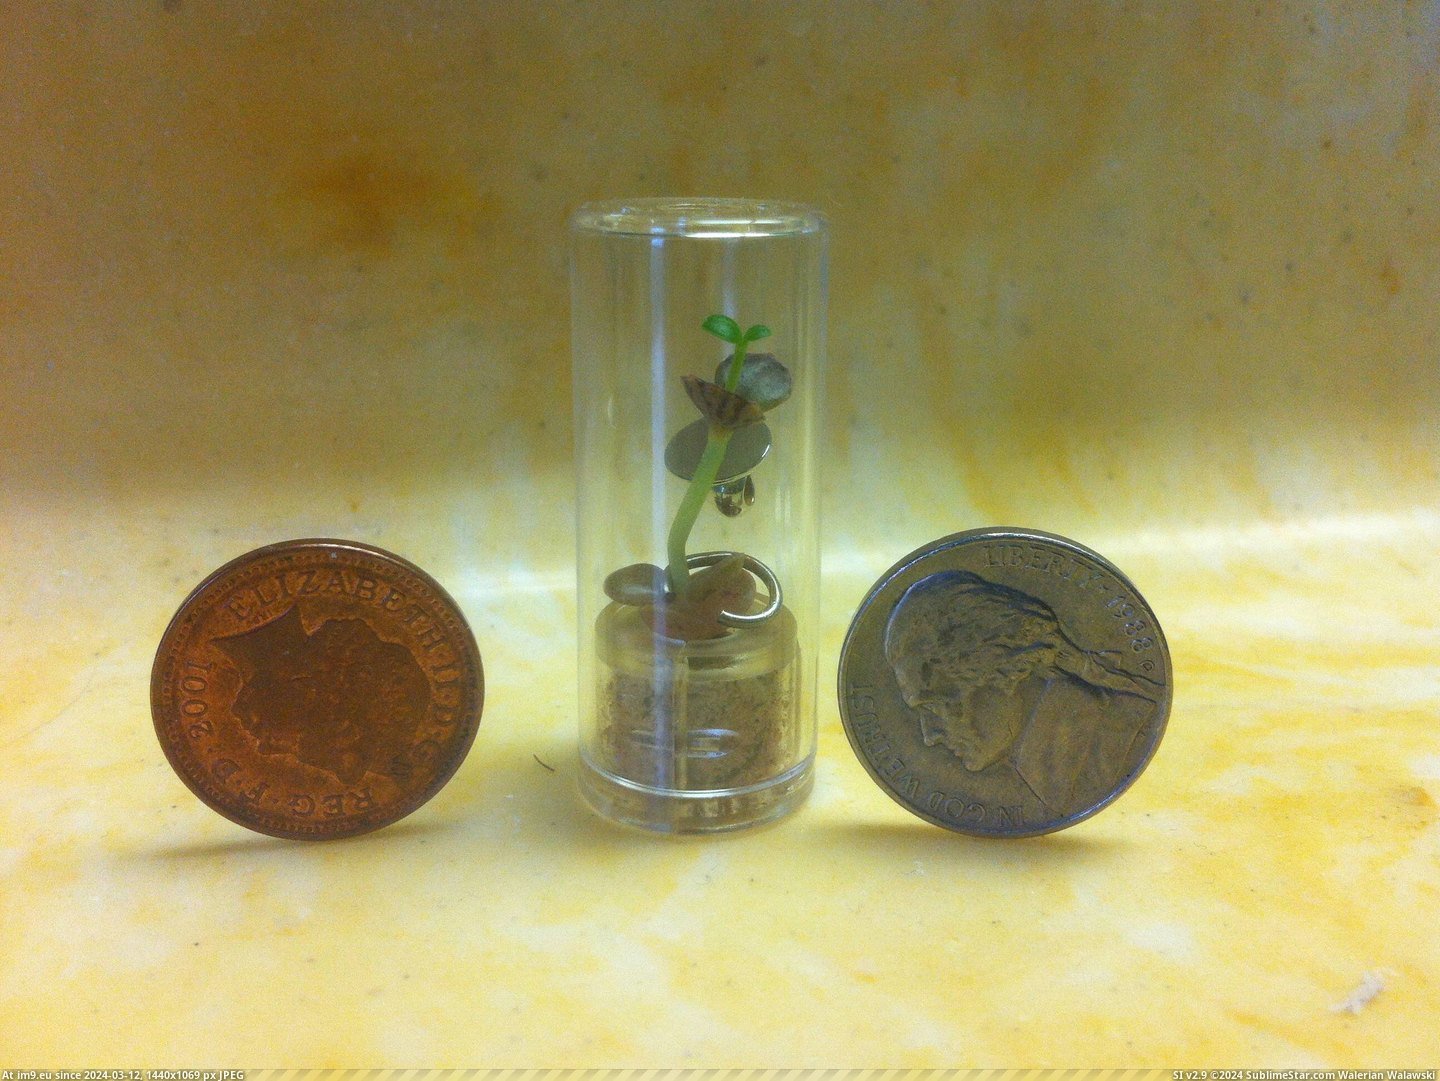 #Tiny #Mail #Tobacco #Company #Plant [Mildlyinteresting] A tobacco company sent me a tiny plant in the mail Pic. (Изображение из альбом My r/MILDLYINTERESTING favs))